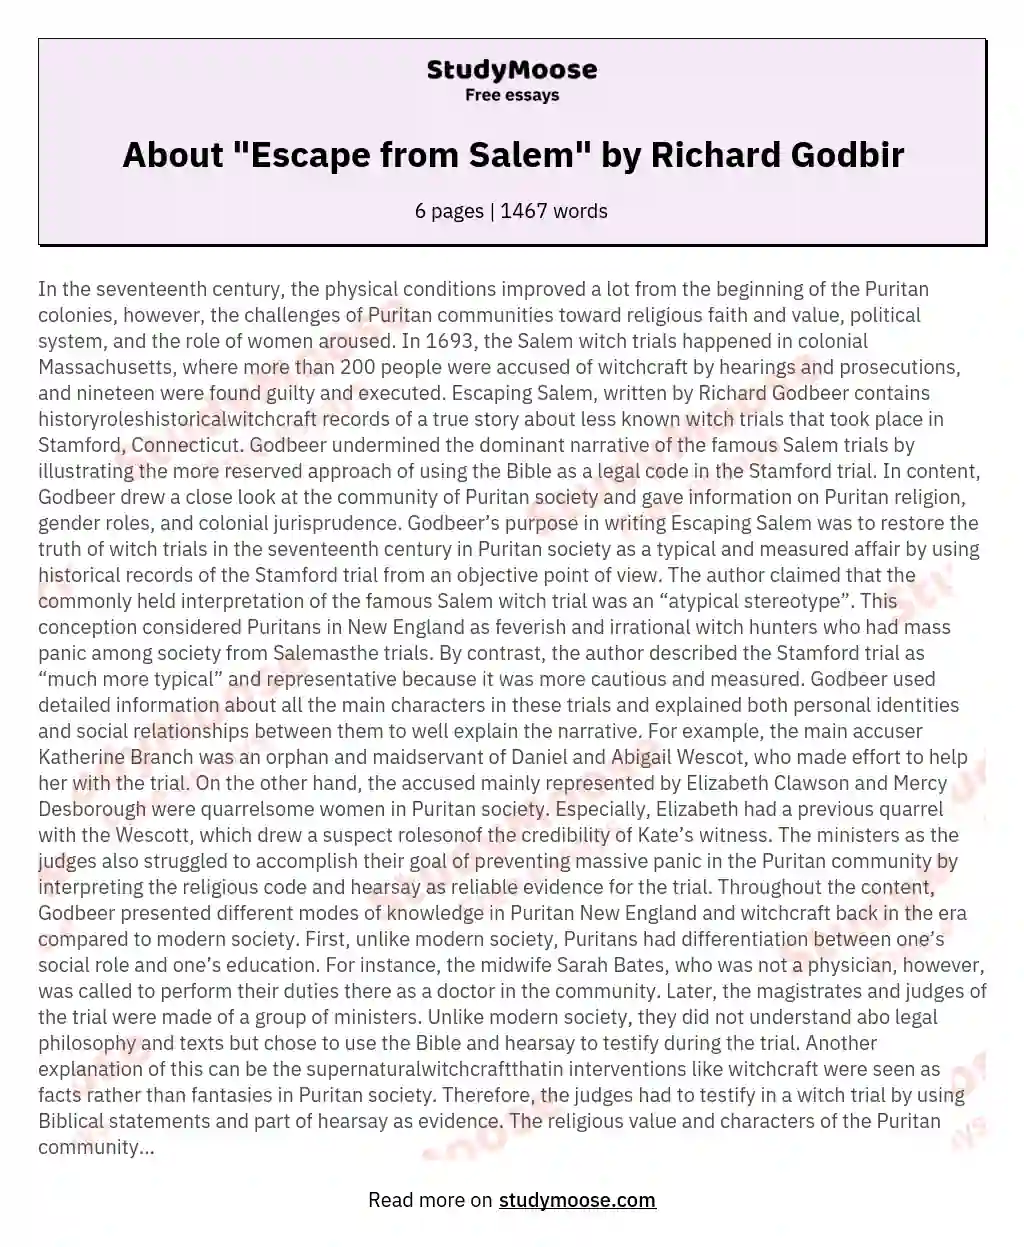 About "Escape from Salem" by Richard Godbir essay